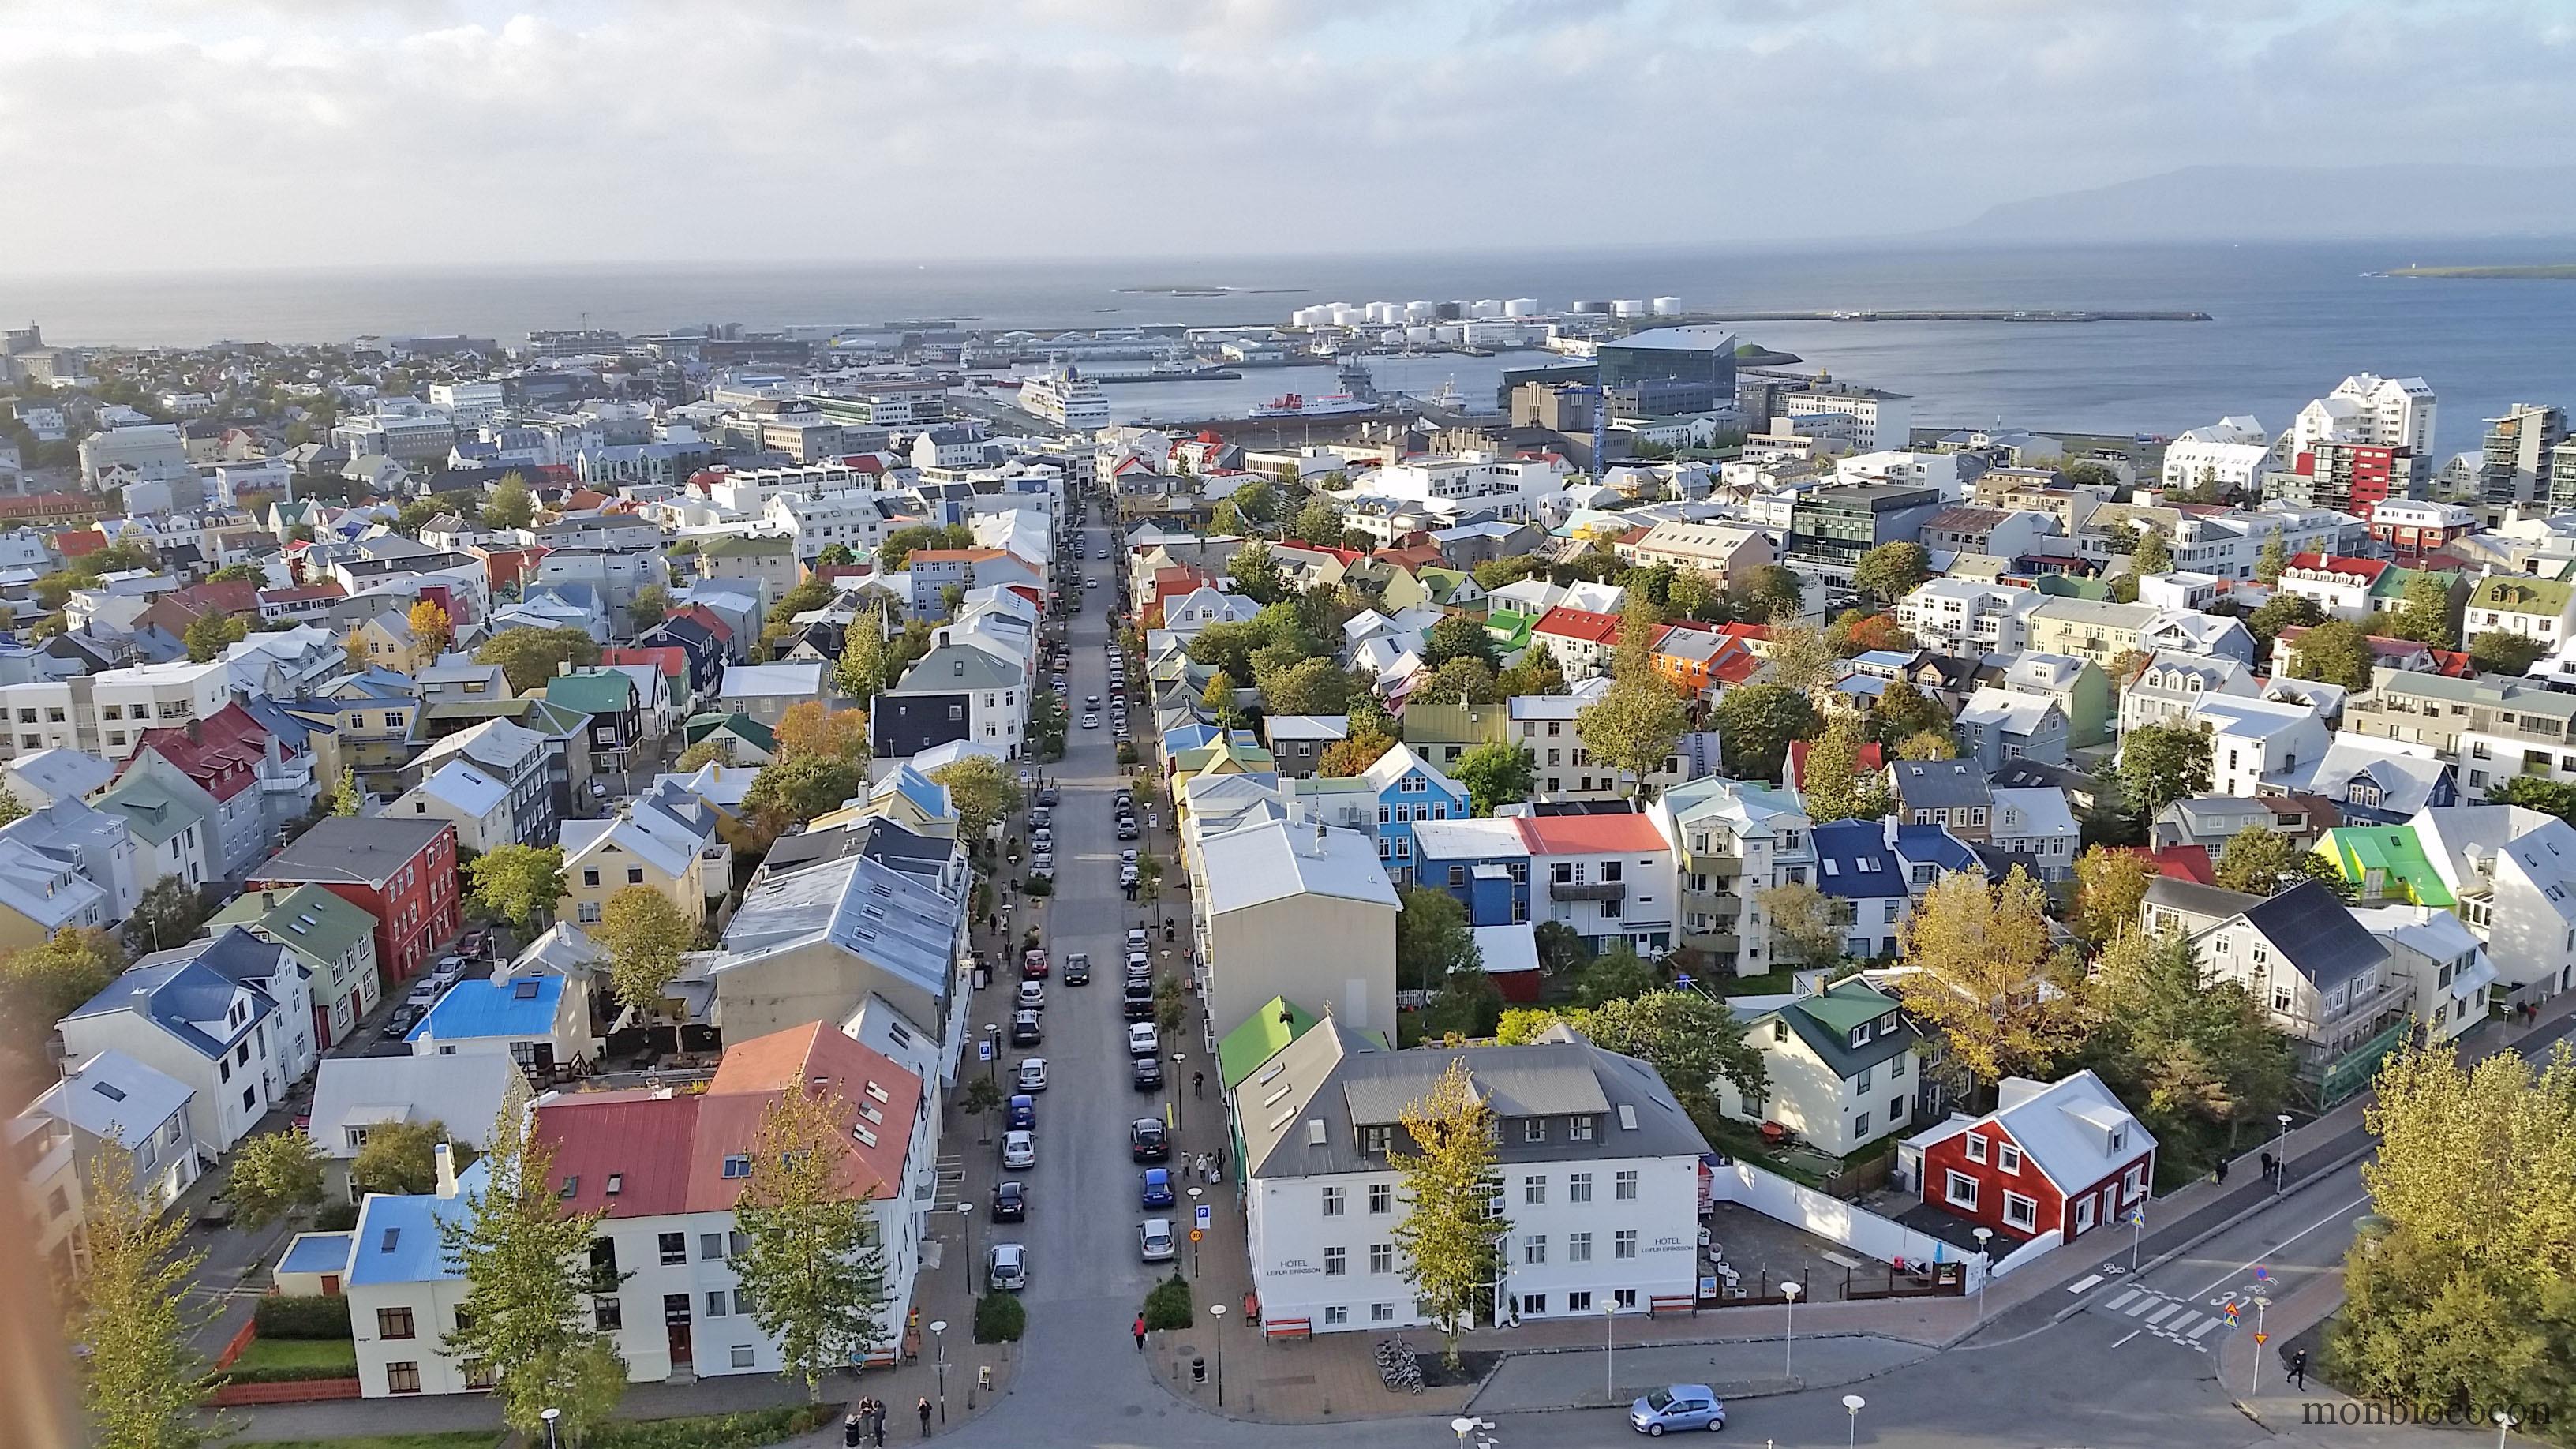 Roadtrip in Iceland : Reykjavik et le Cercle d’Or…avant le retour en France